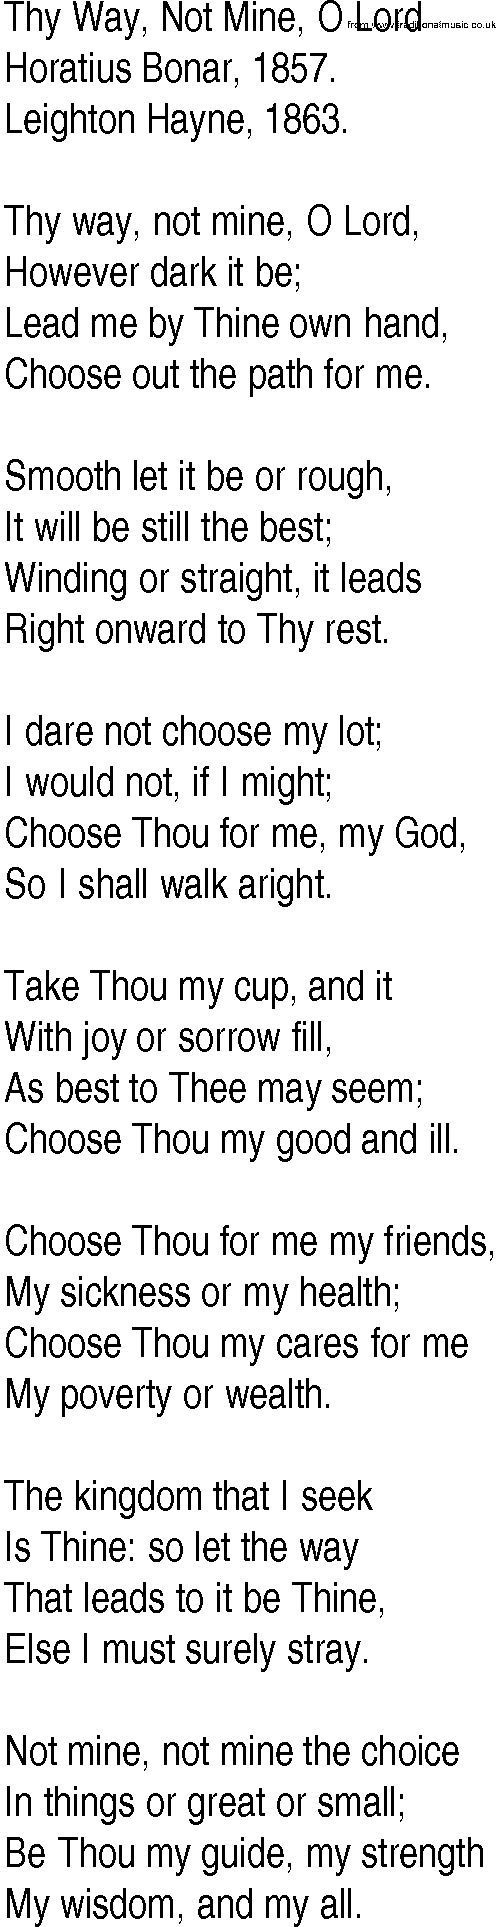 Hymn and Gospel Song: Thy Way, Not Mine, O Lord by Horatius Bonar lyrics